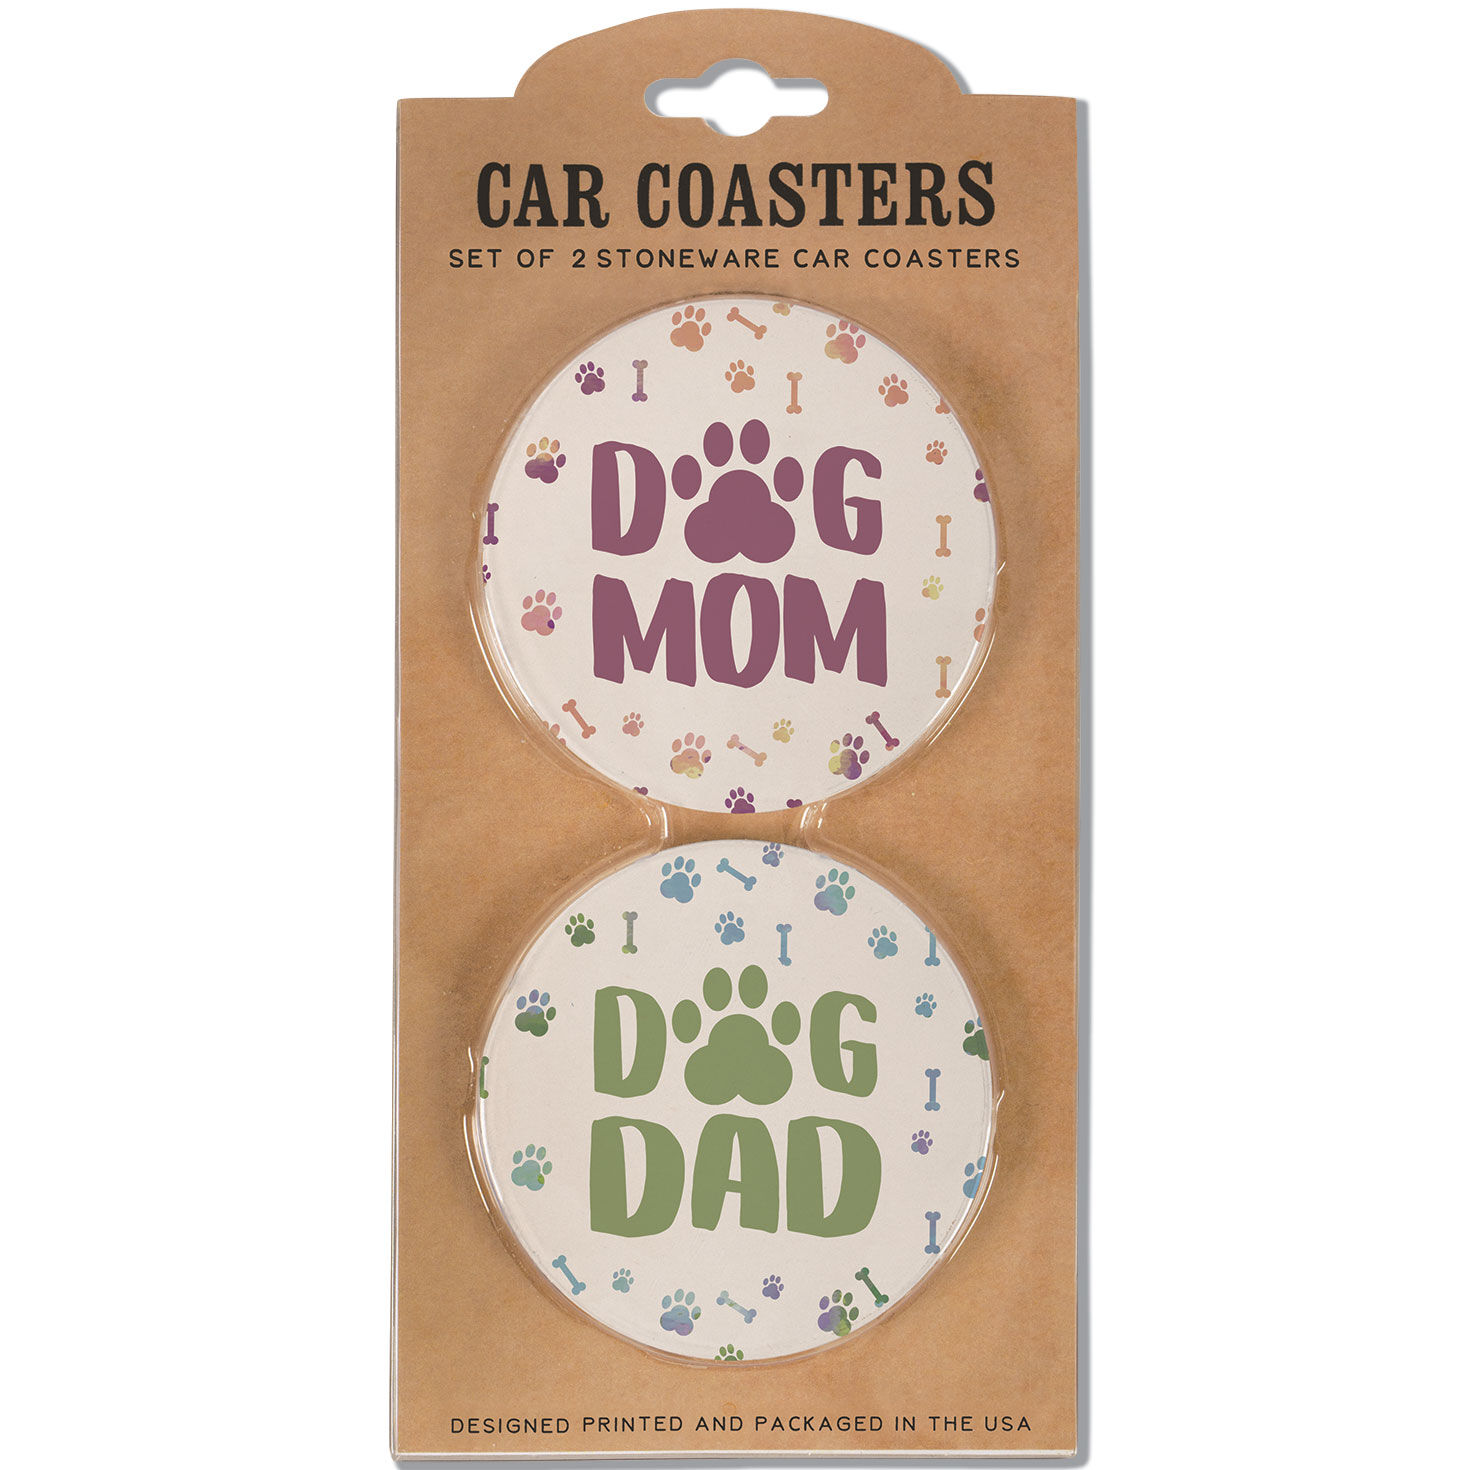 Carson Dog Mom & Dog Dad Car Coaster Set for only USD 7.99 | Hallmark